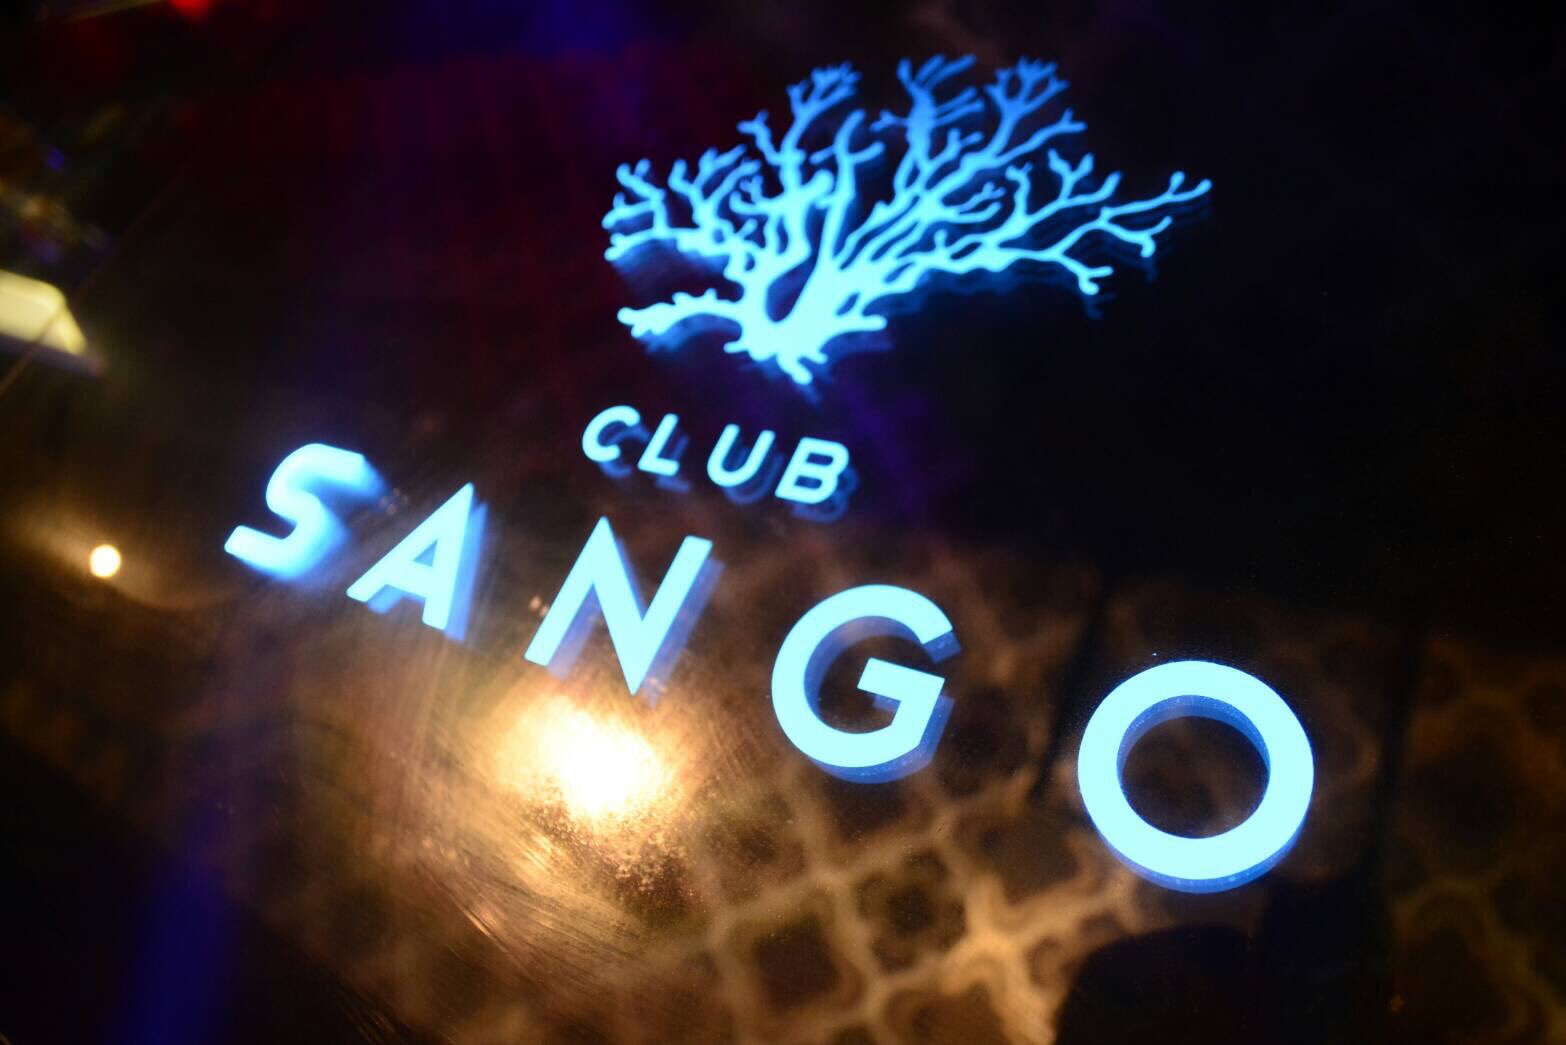 CLUB SANGO3